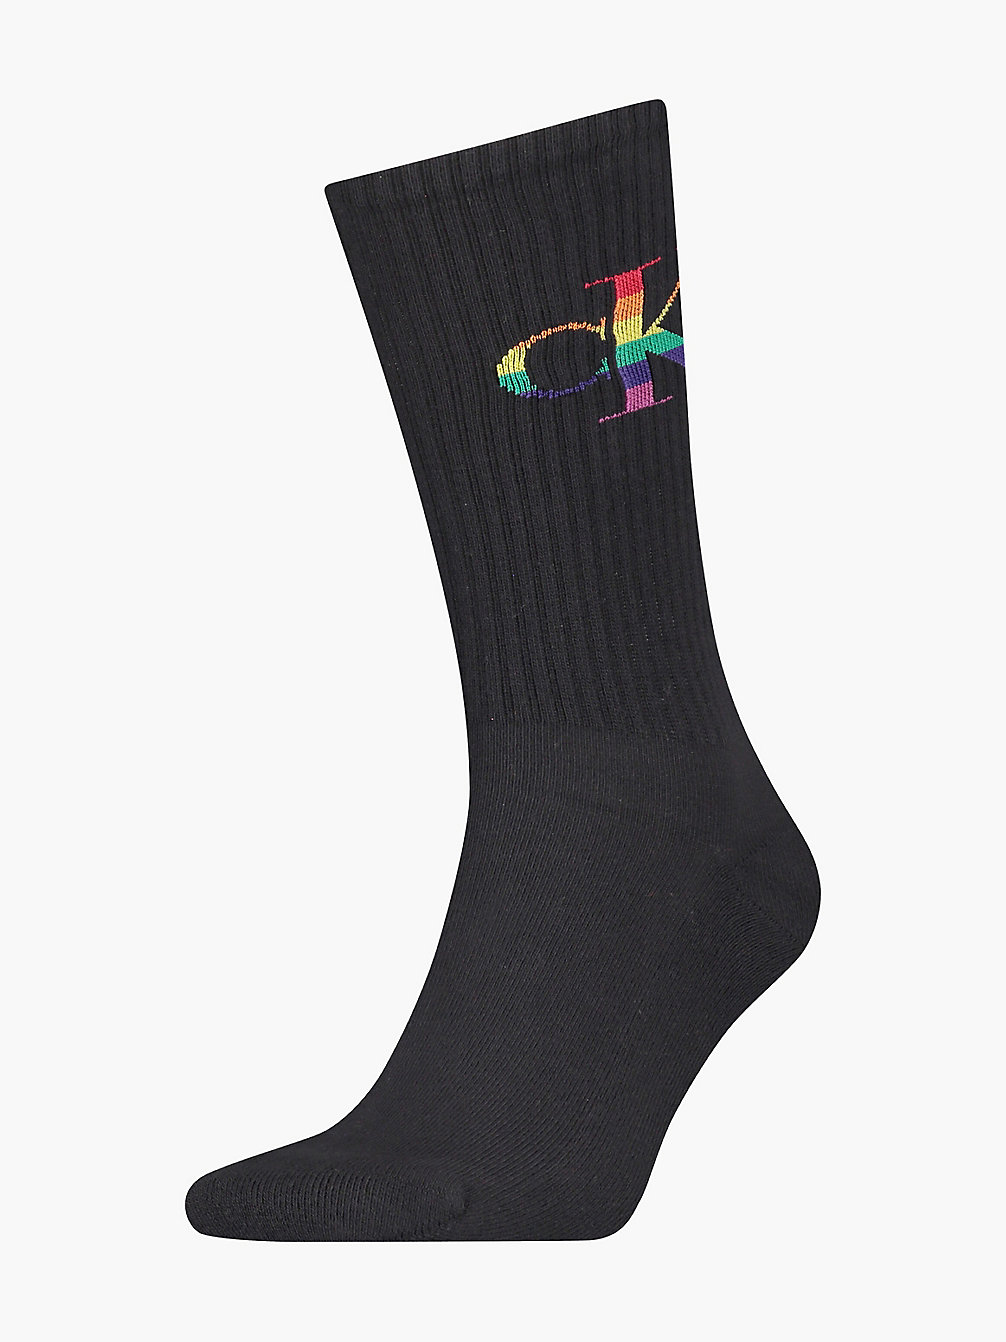 BLACK Crew Socks - Pride undefined men Calvin Klein